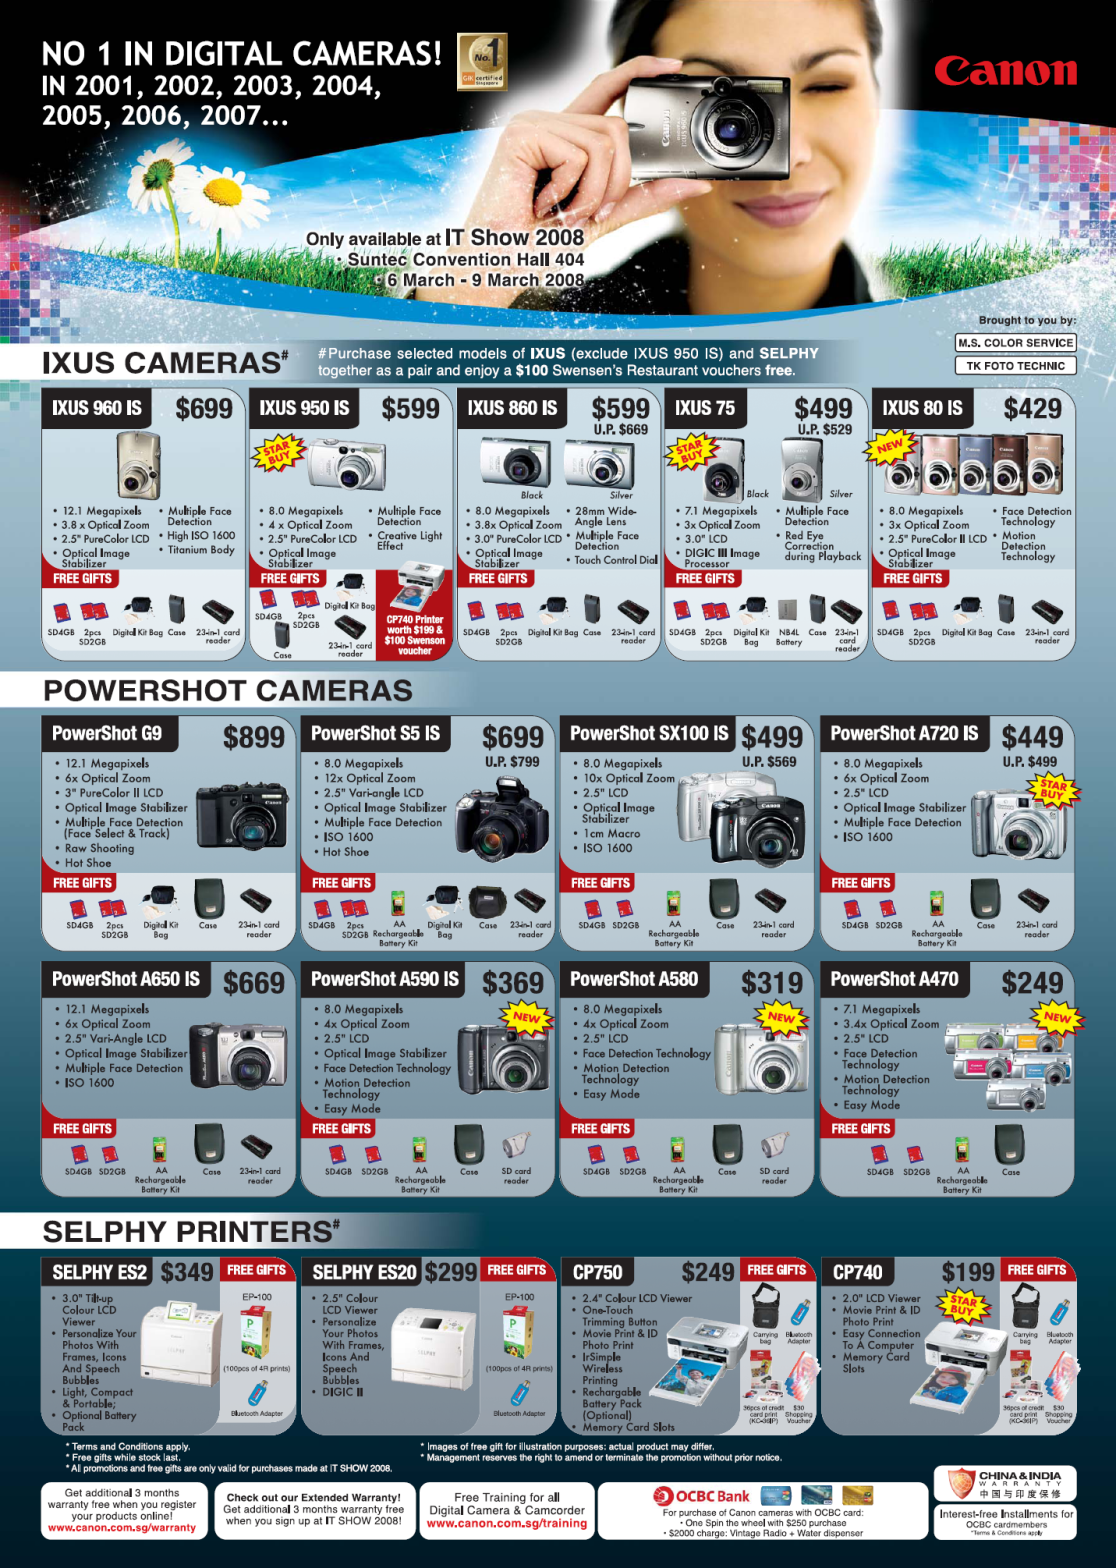 IT Show 2008 price list image brochure of Canon Digital Cameras Ixus Powershot Selphy Printers